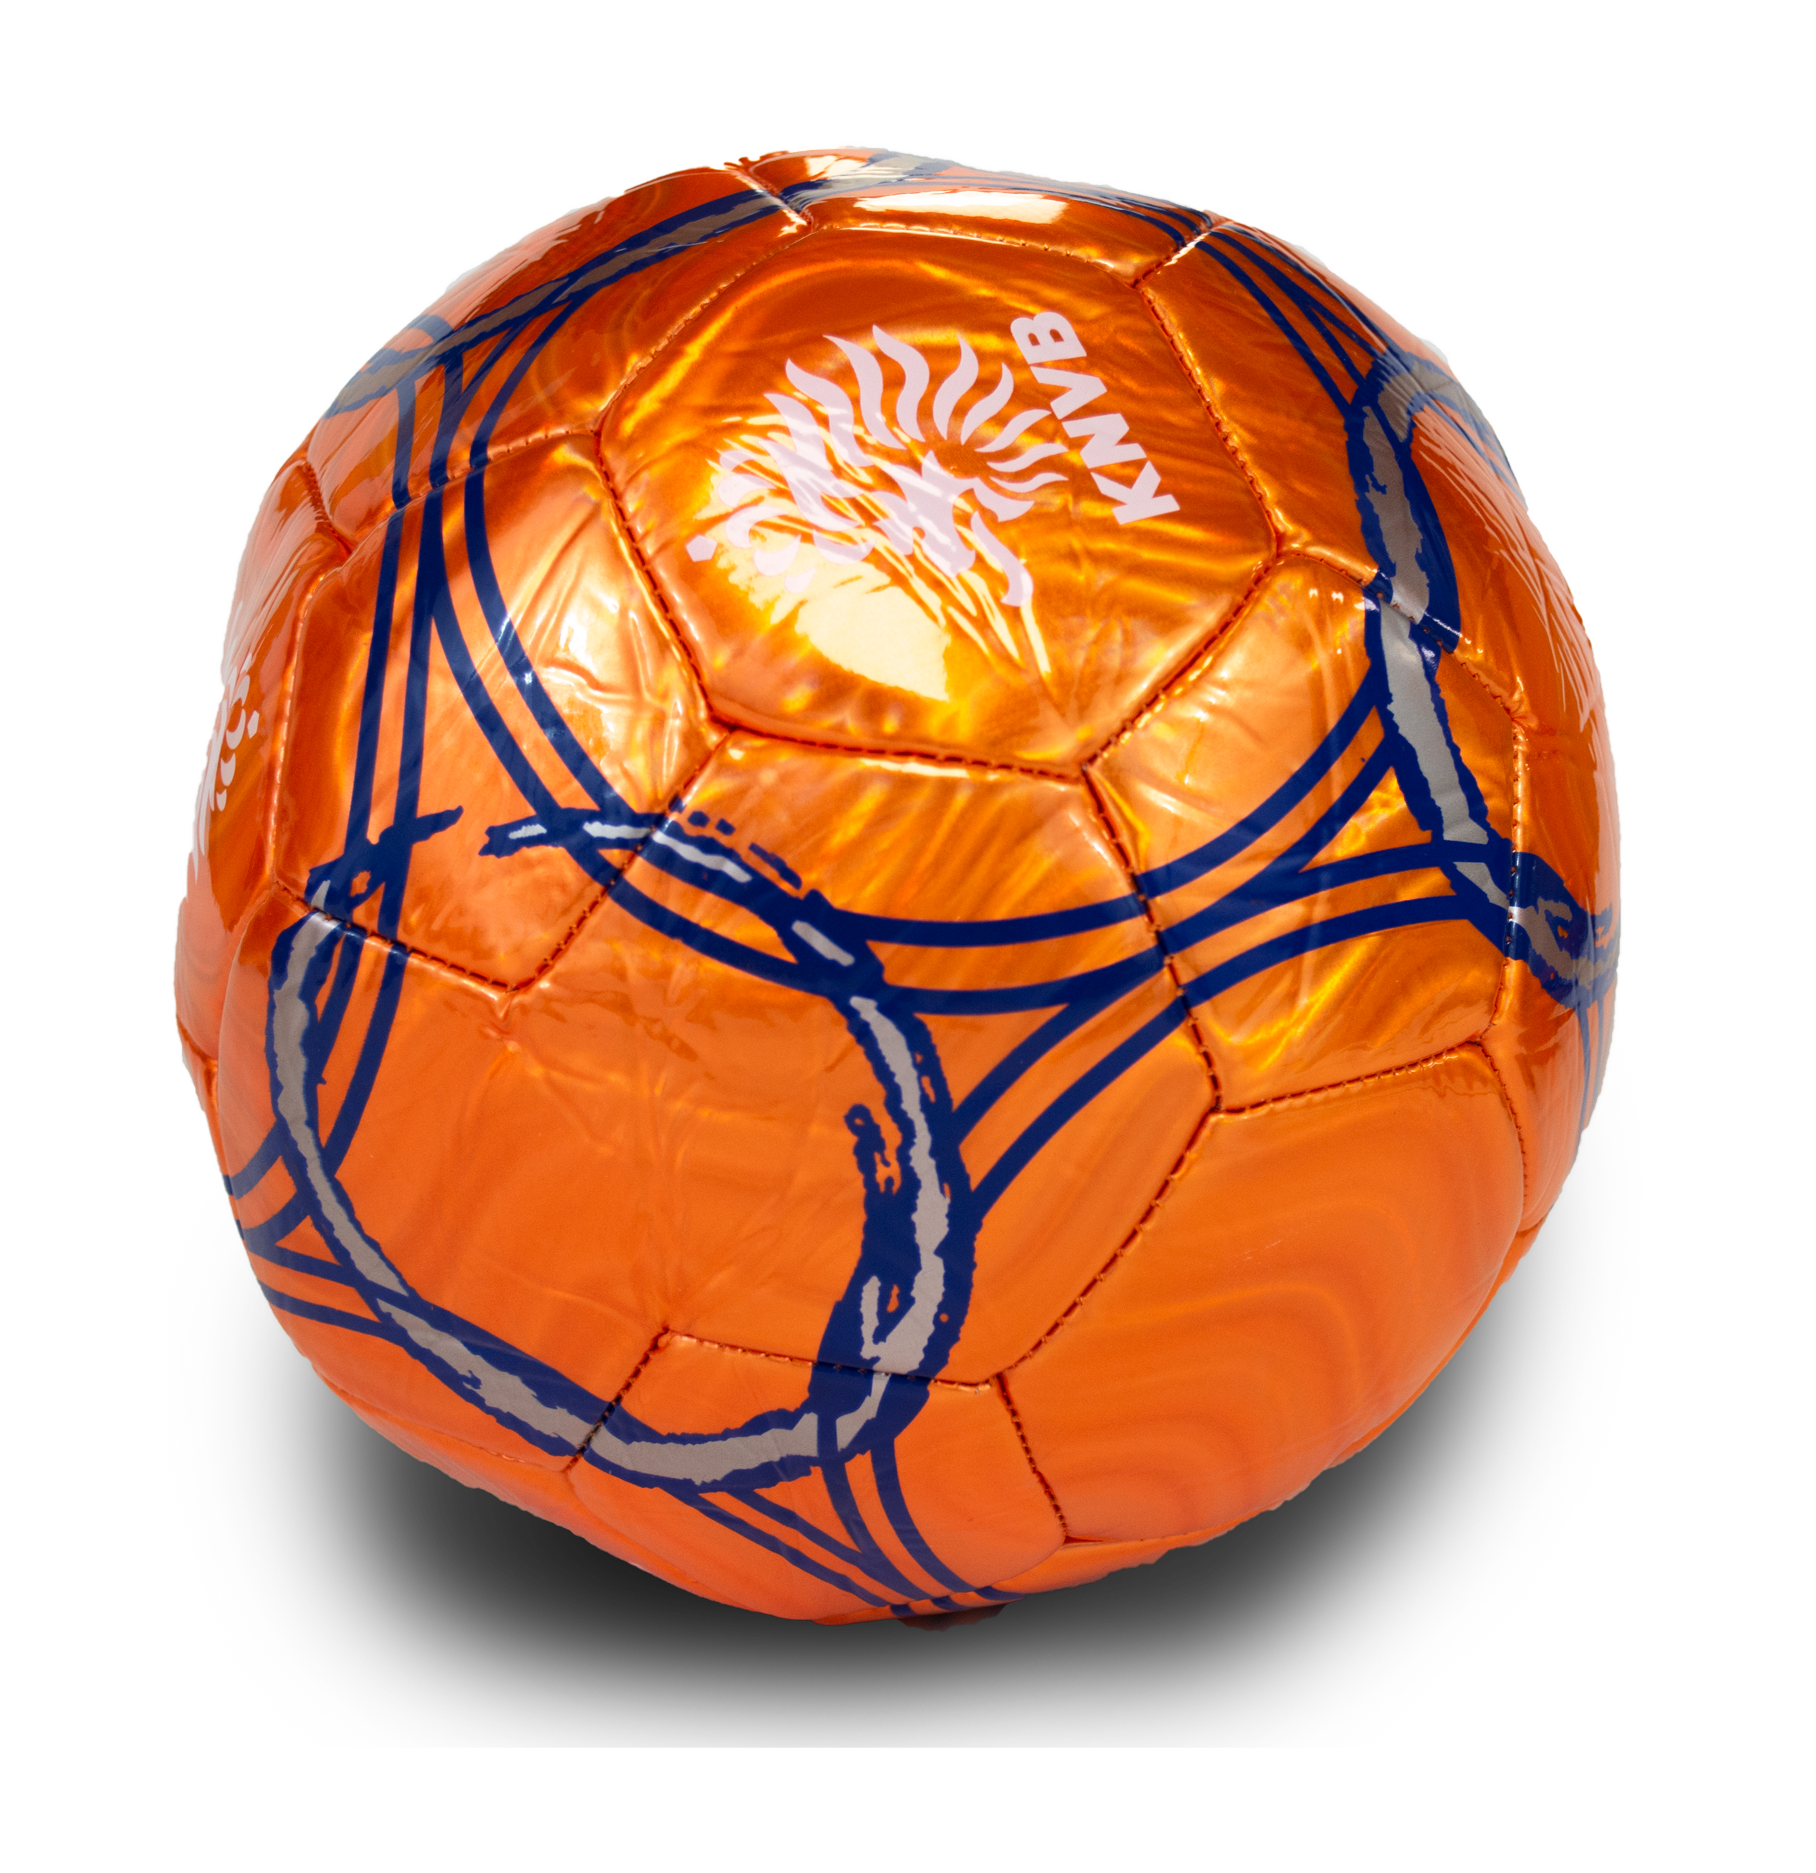 Nike KNVB Football Ball Orange